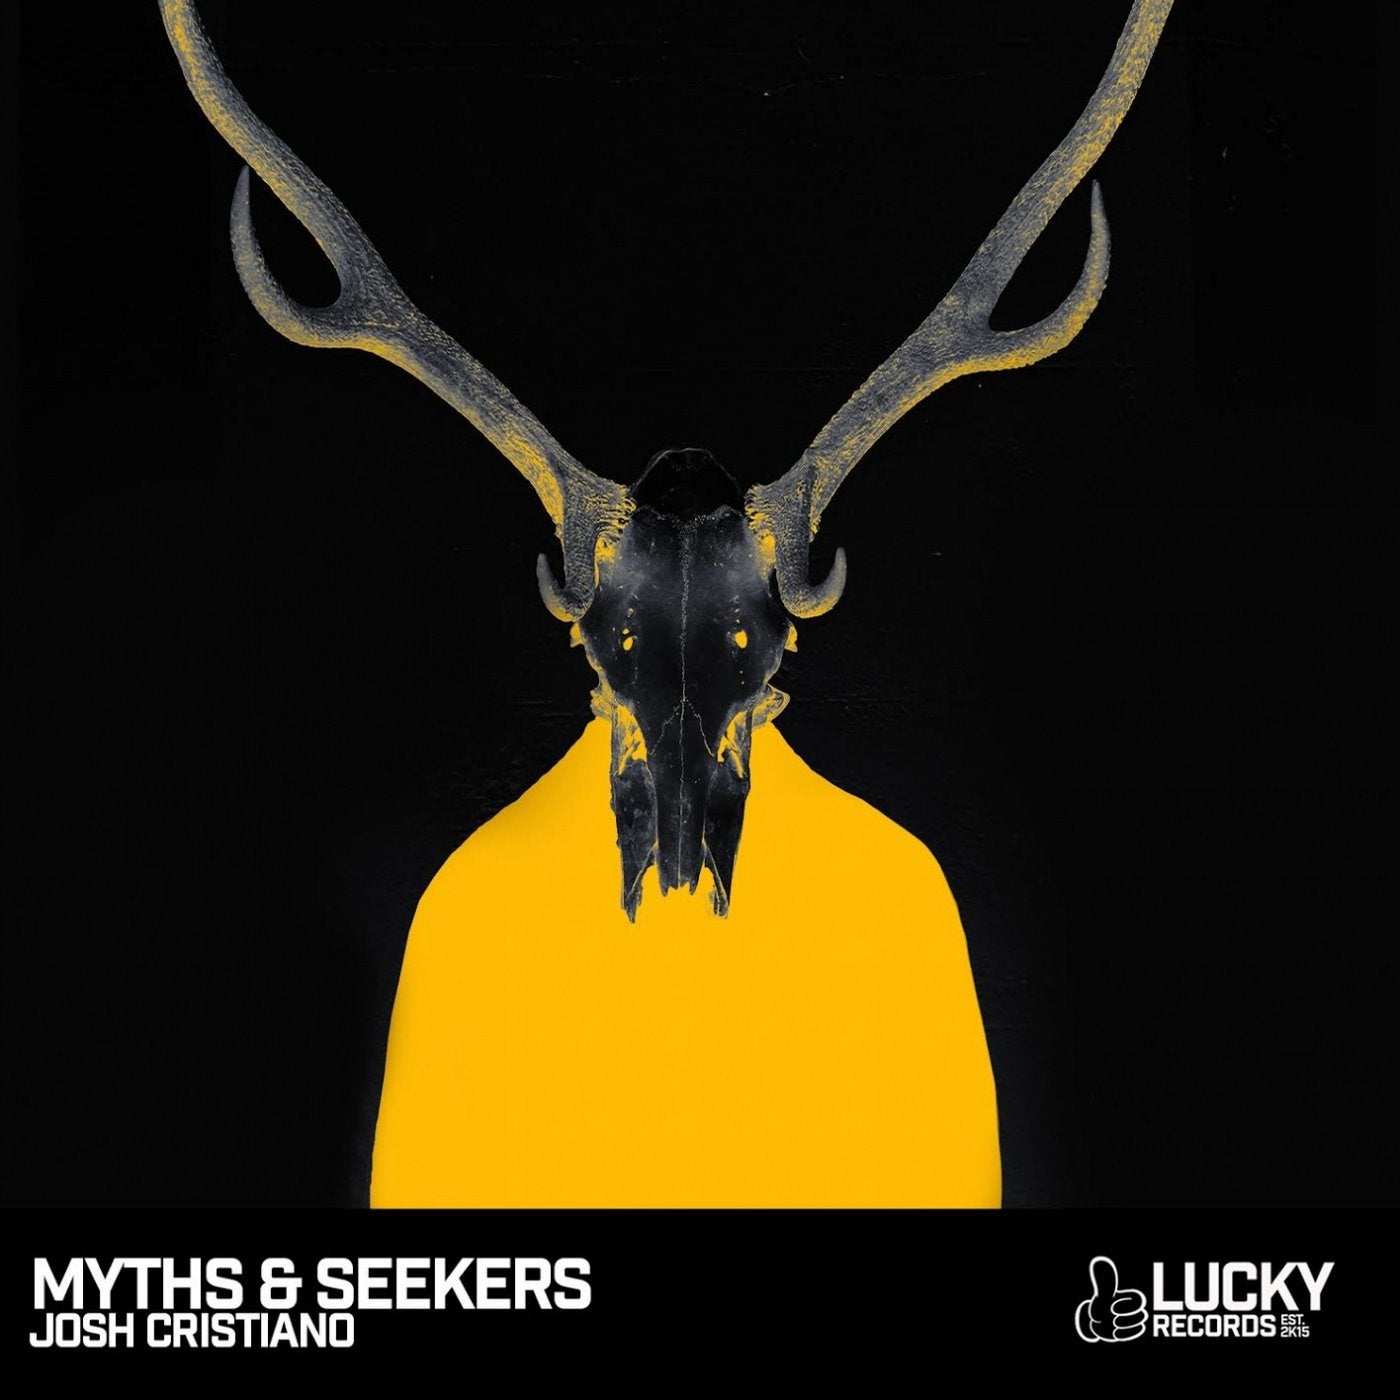 Myths & Seekers